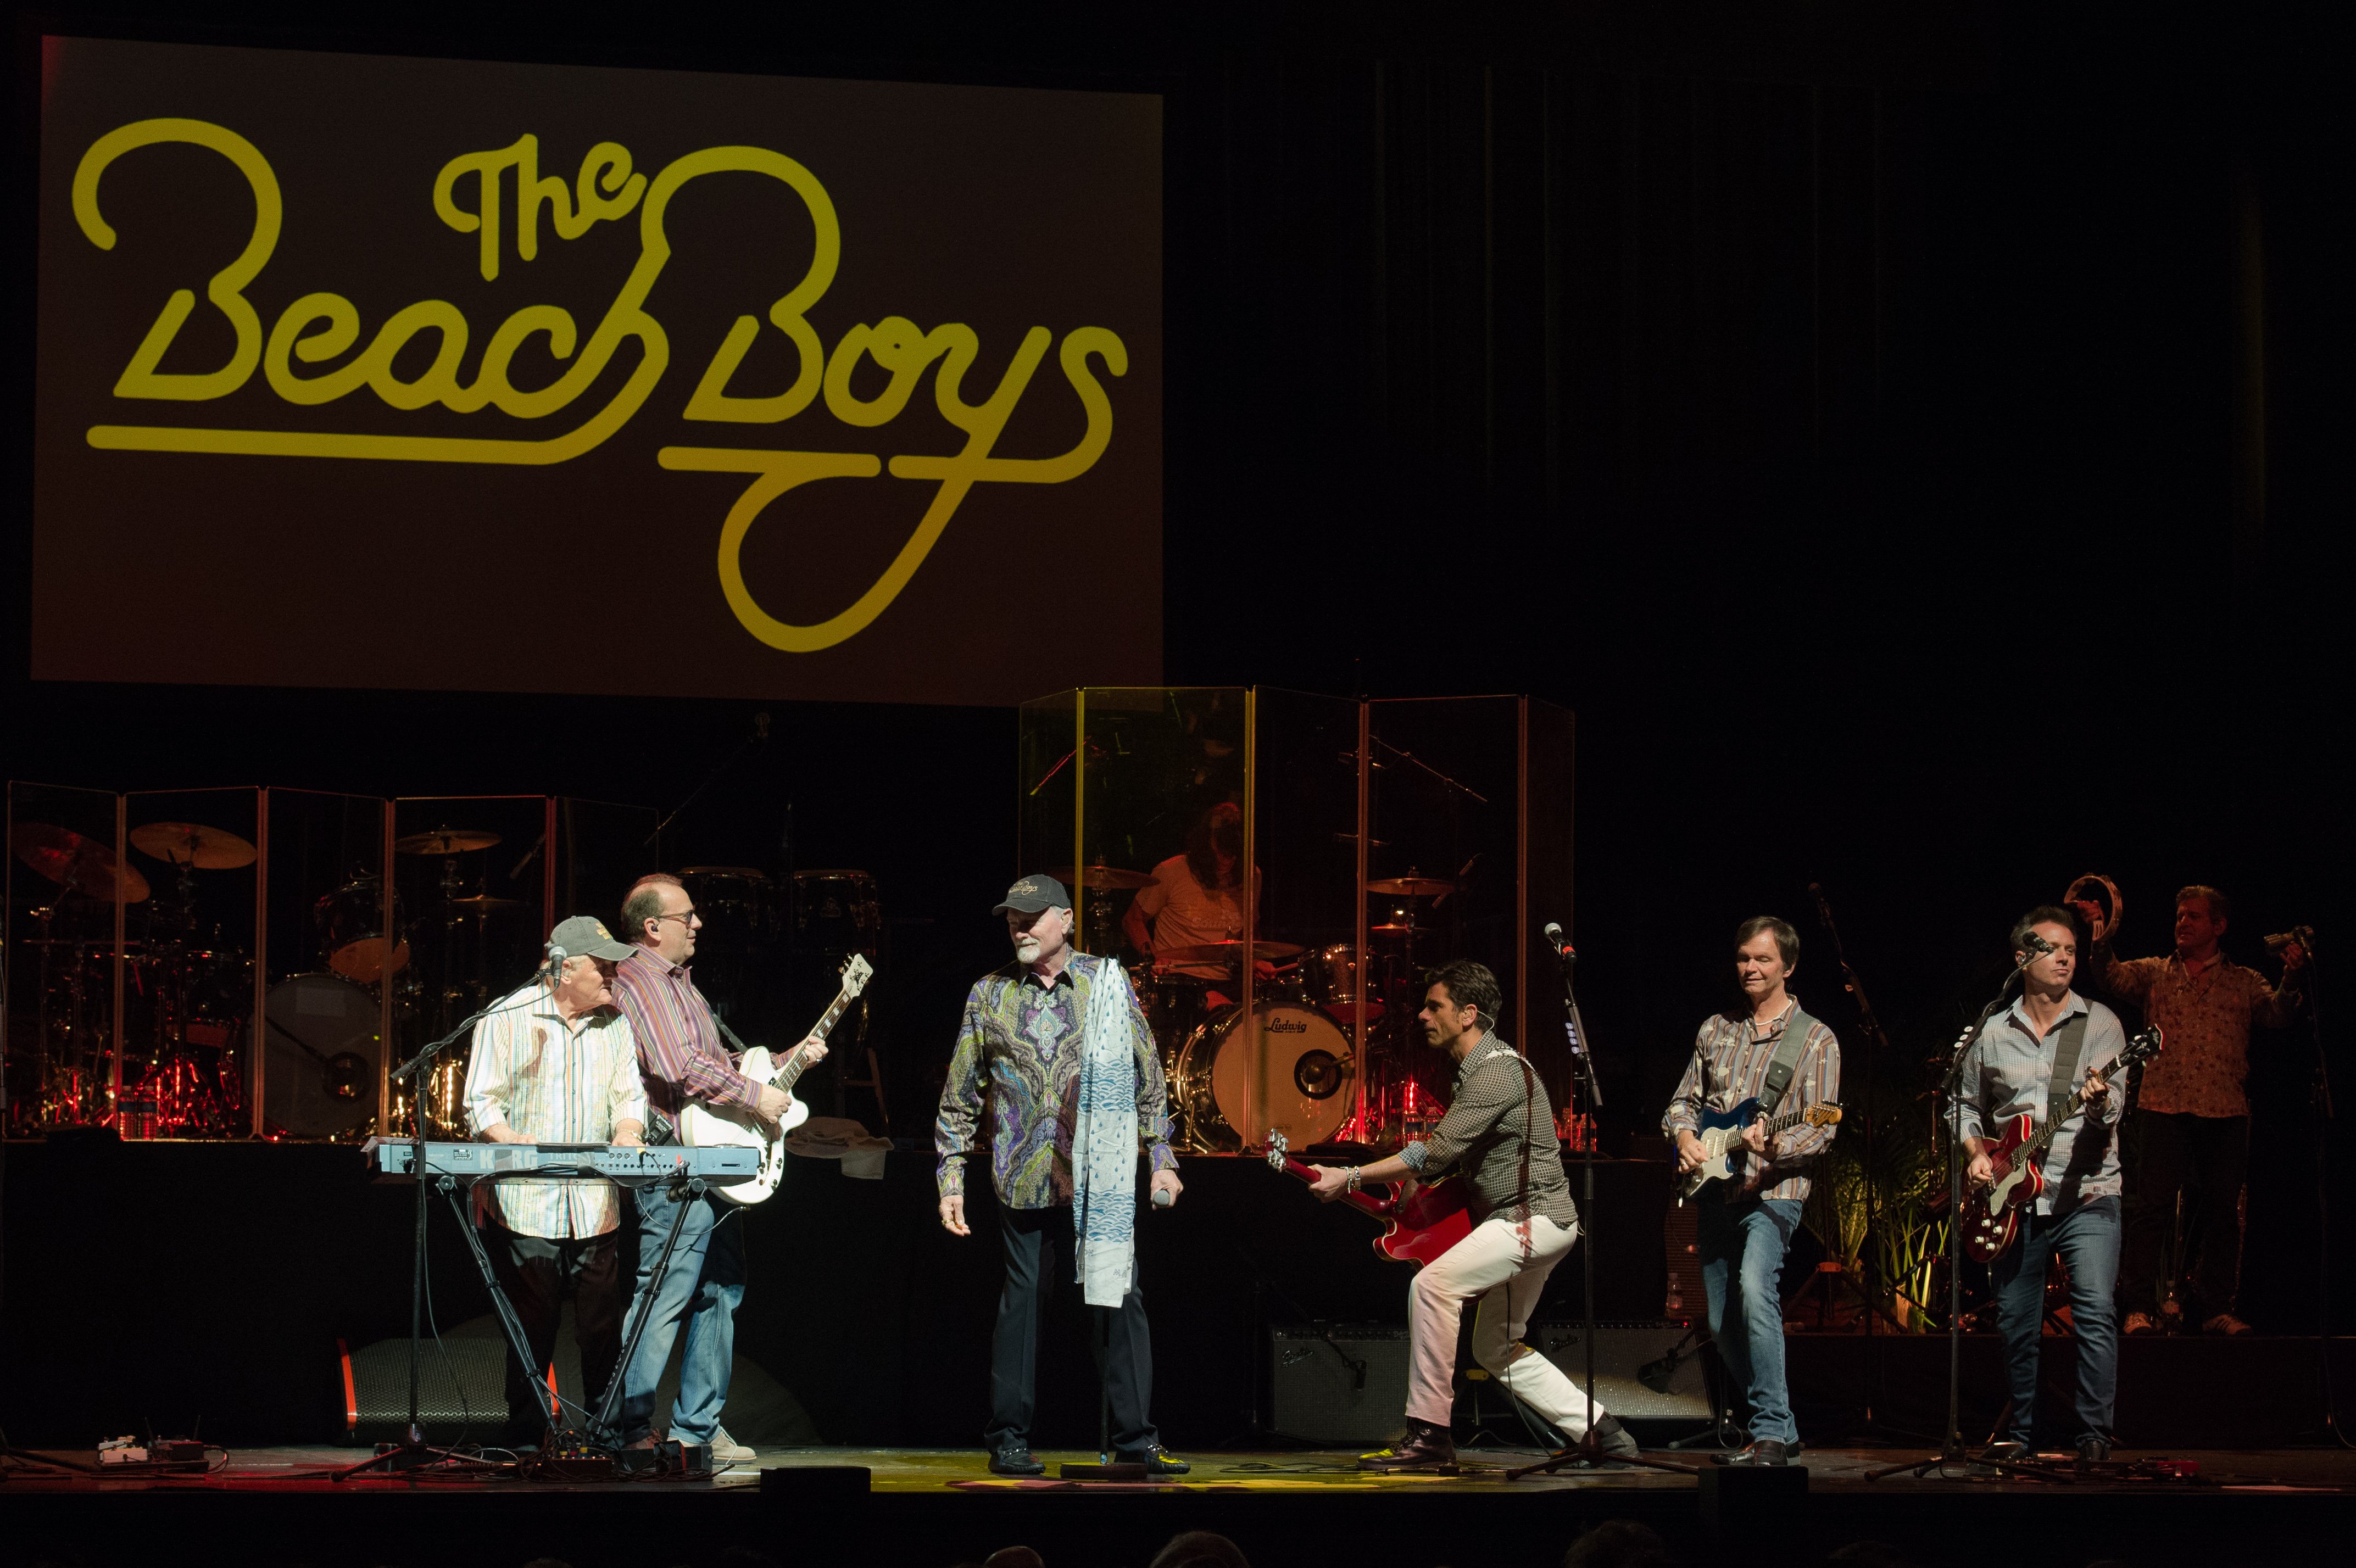 Jeffrey Foskett, Bruce Johnston, Mike Love, John Stamos, and Scott Totten from The Beach Boys